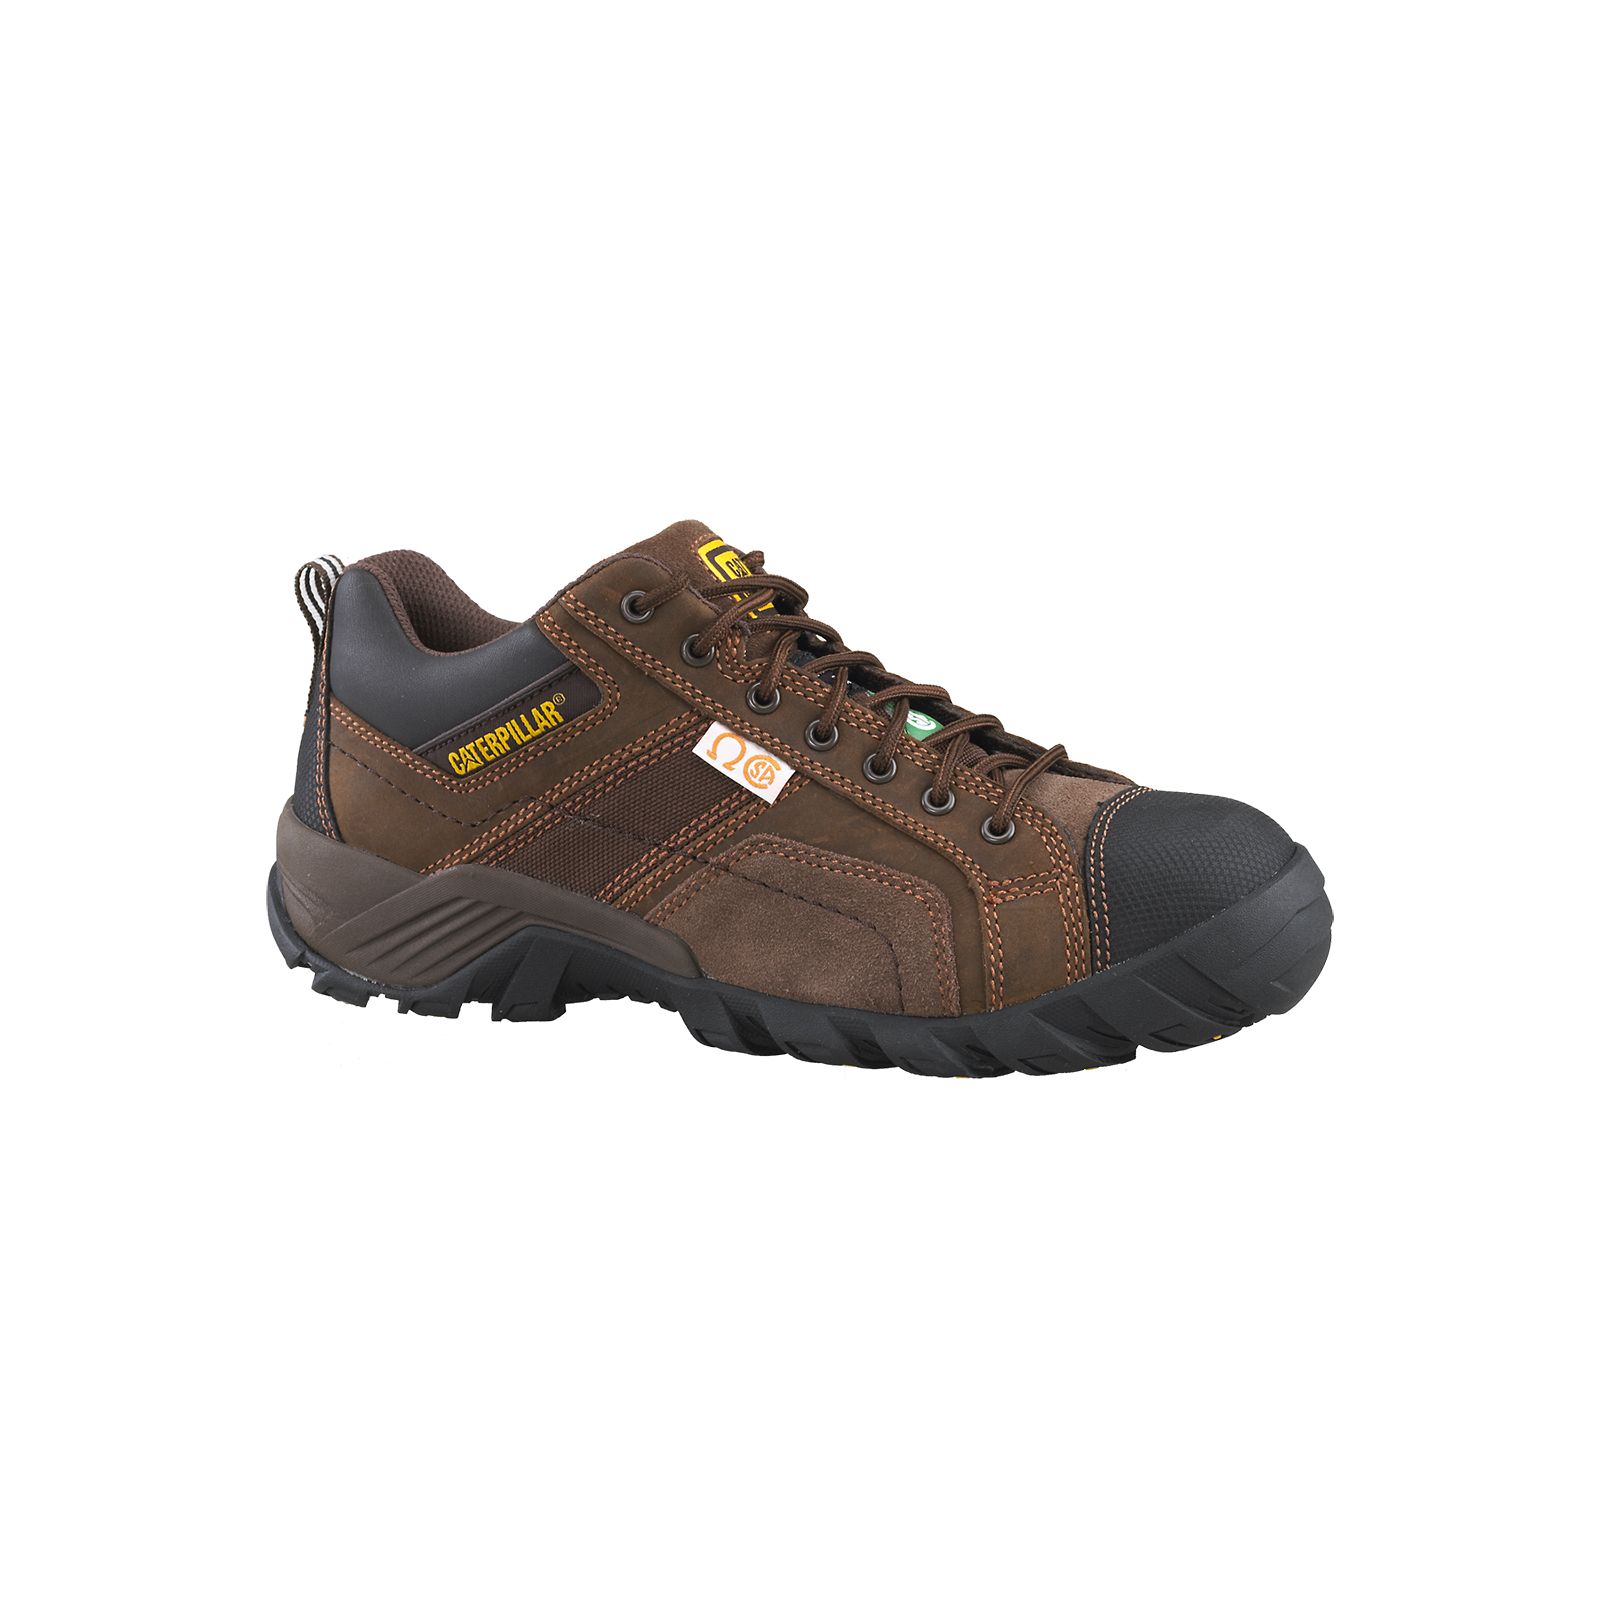 Caterpillar Shoes Online - Caterpillar Argon Csa (Composite Toe, Non Metallic) Mens Work Shoes Dark Brown (042693-URV)